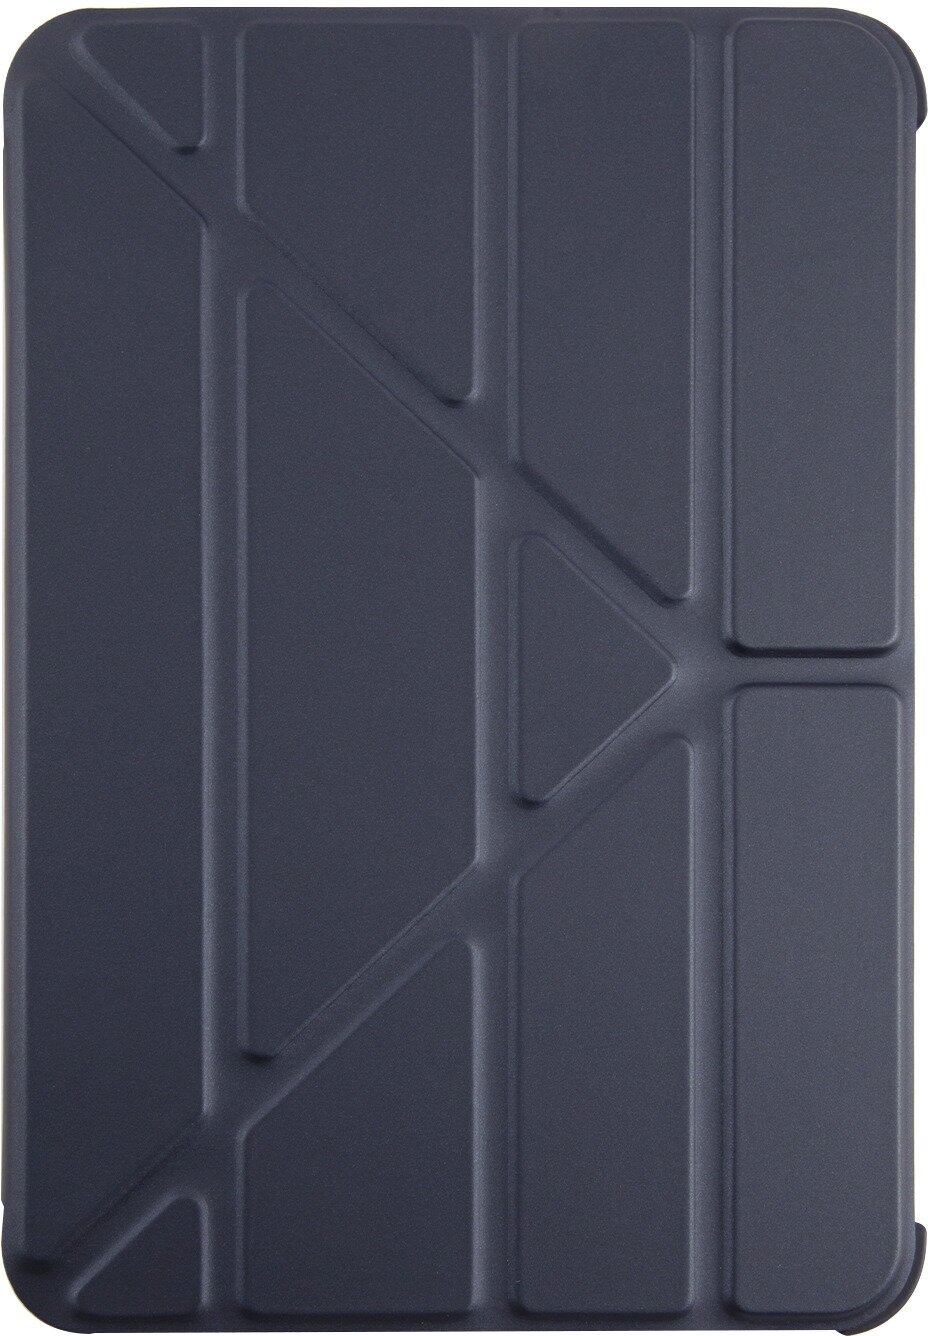 Защитный чехол-книжка для планшета iPad Mini 6/Эппл Айпад мини 6 (2021) подставка "Y", с подкладкой из микрофибры, синий